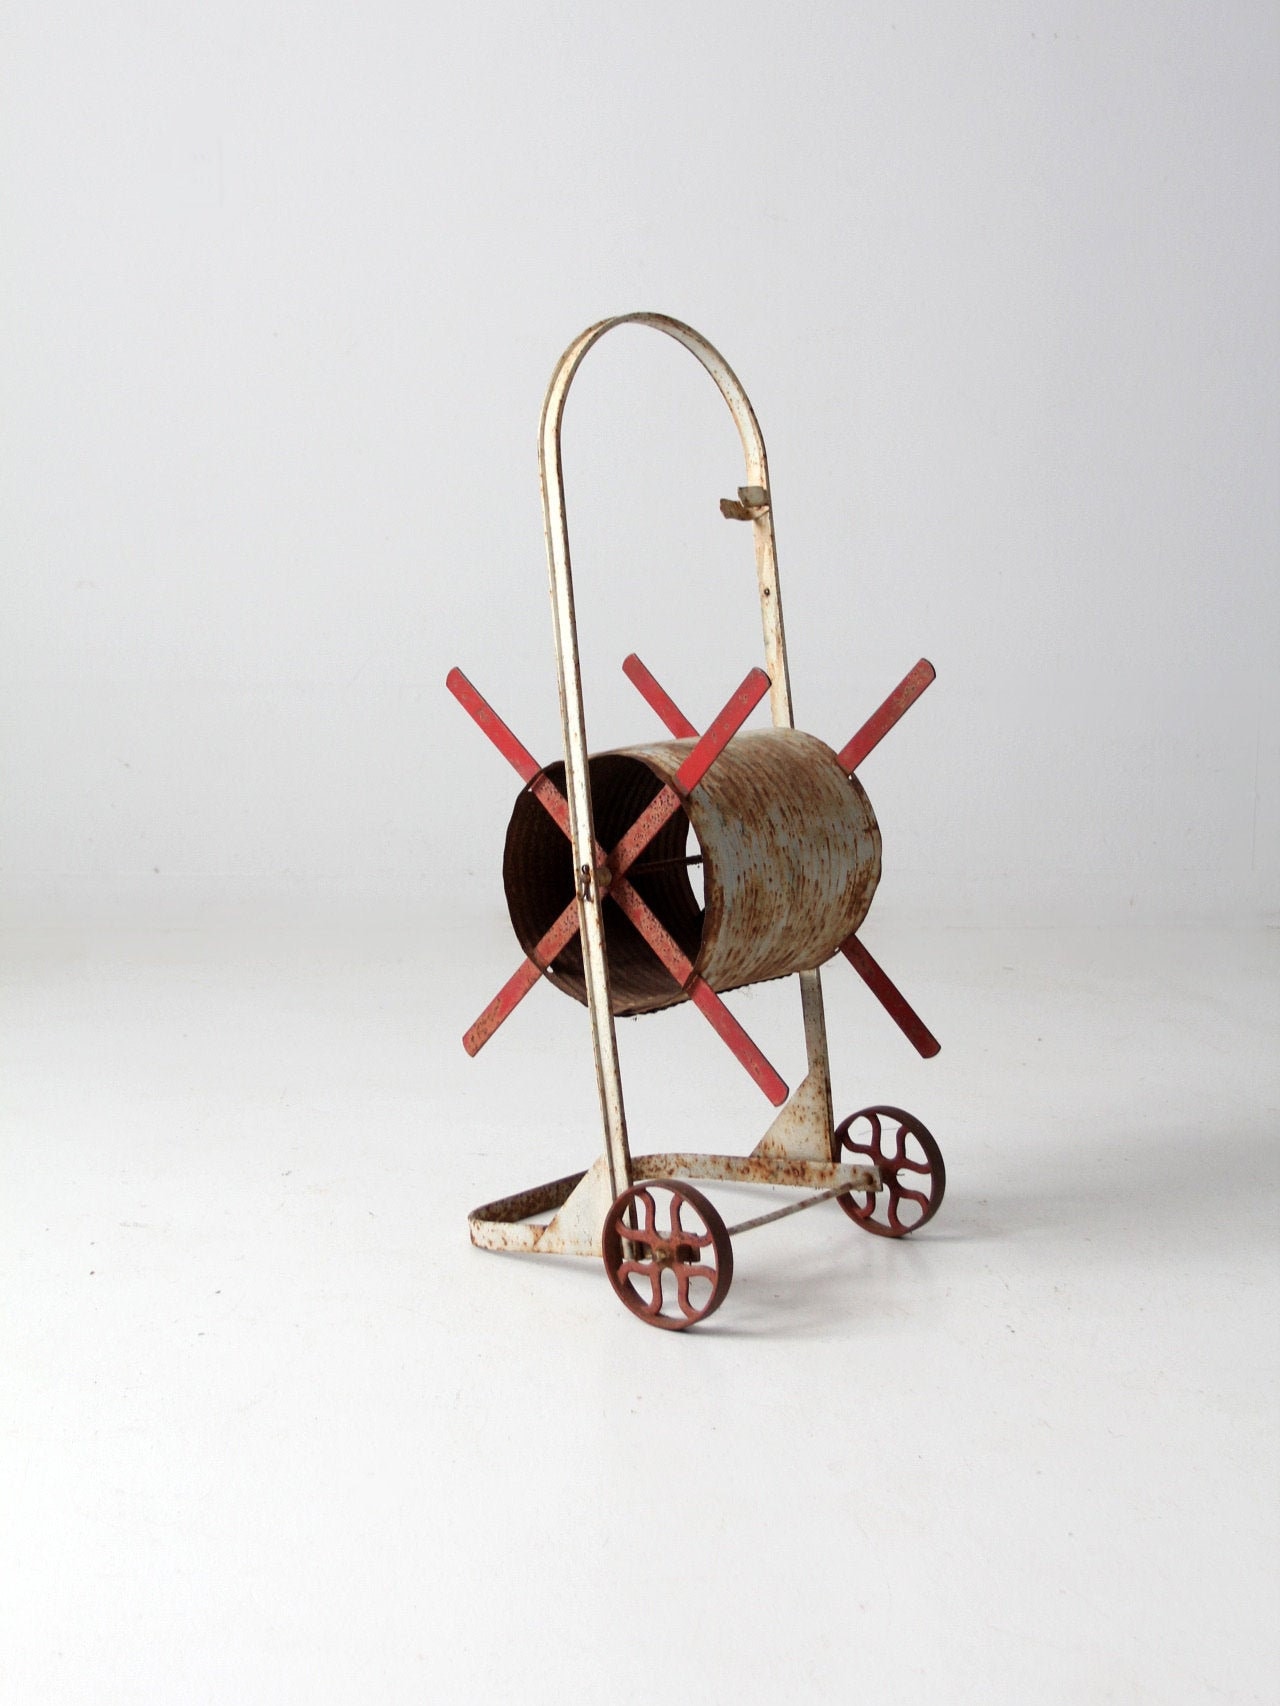 Vintage Firehose Reel On Large-Wheel Metal Cart w/ Firehose